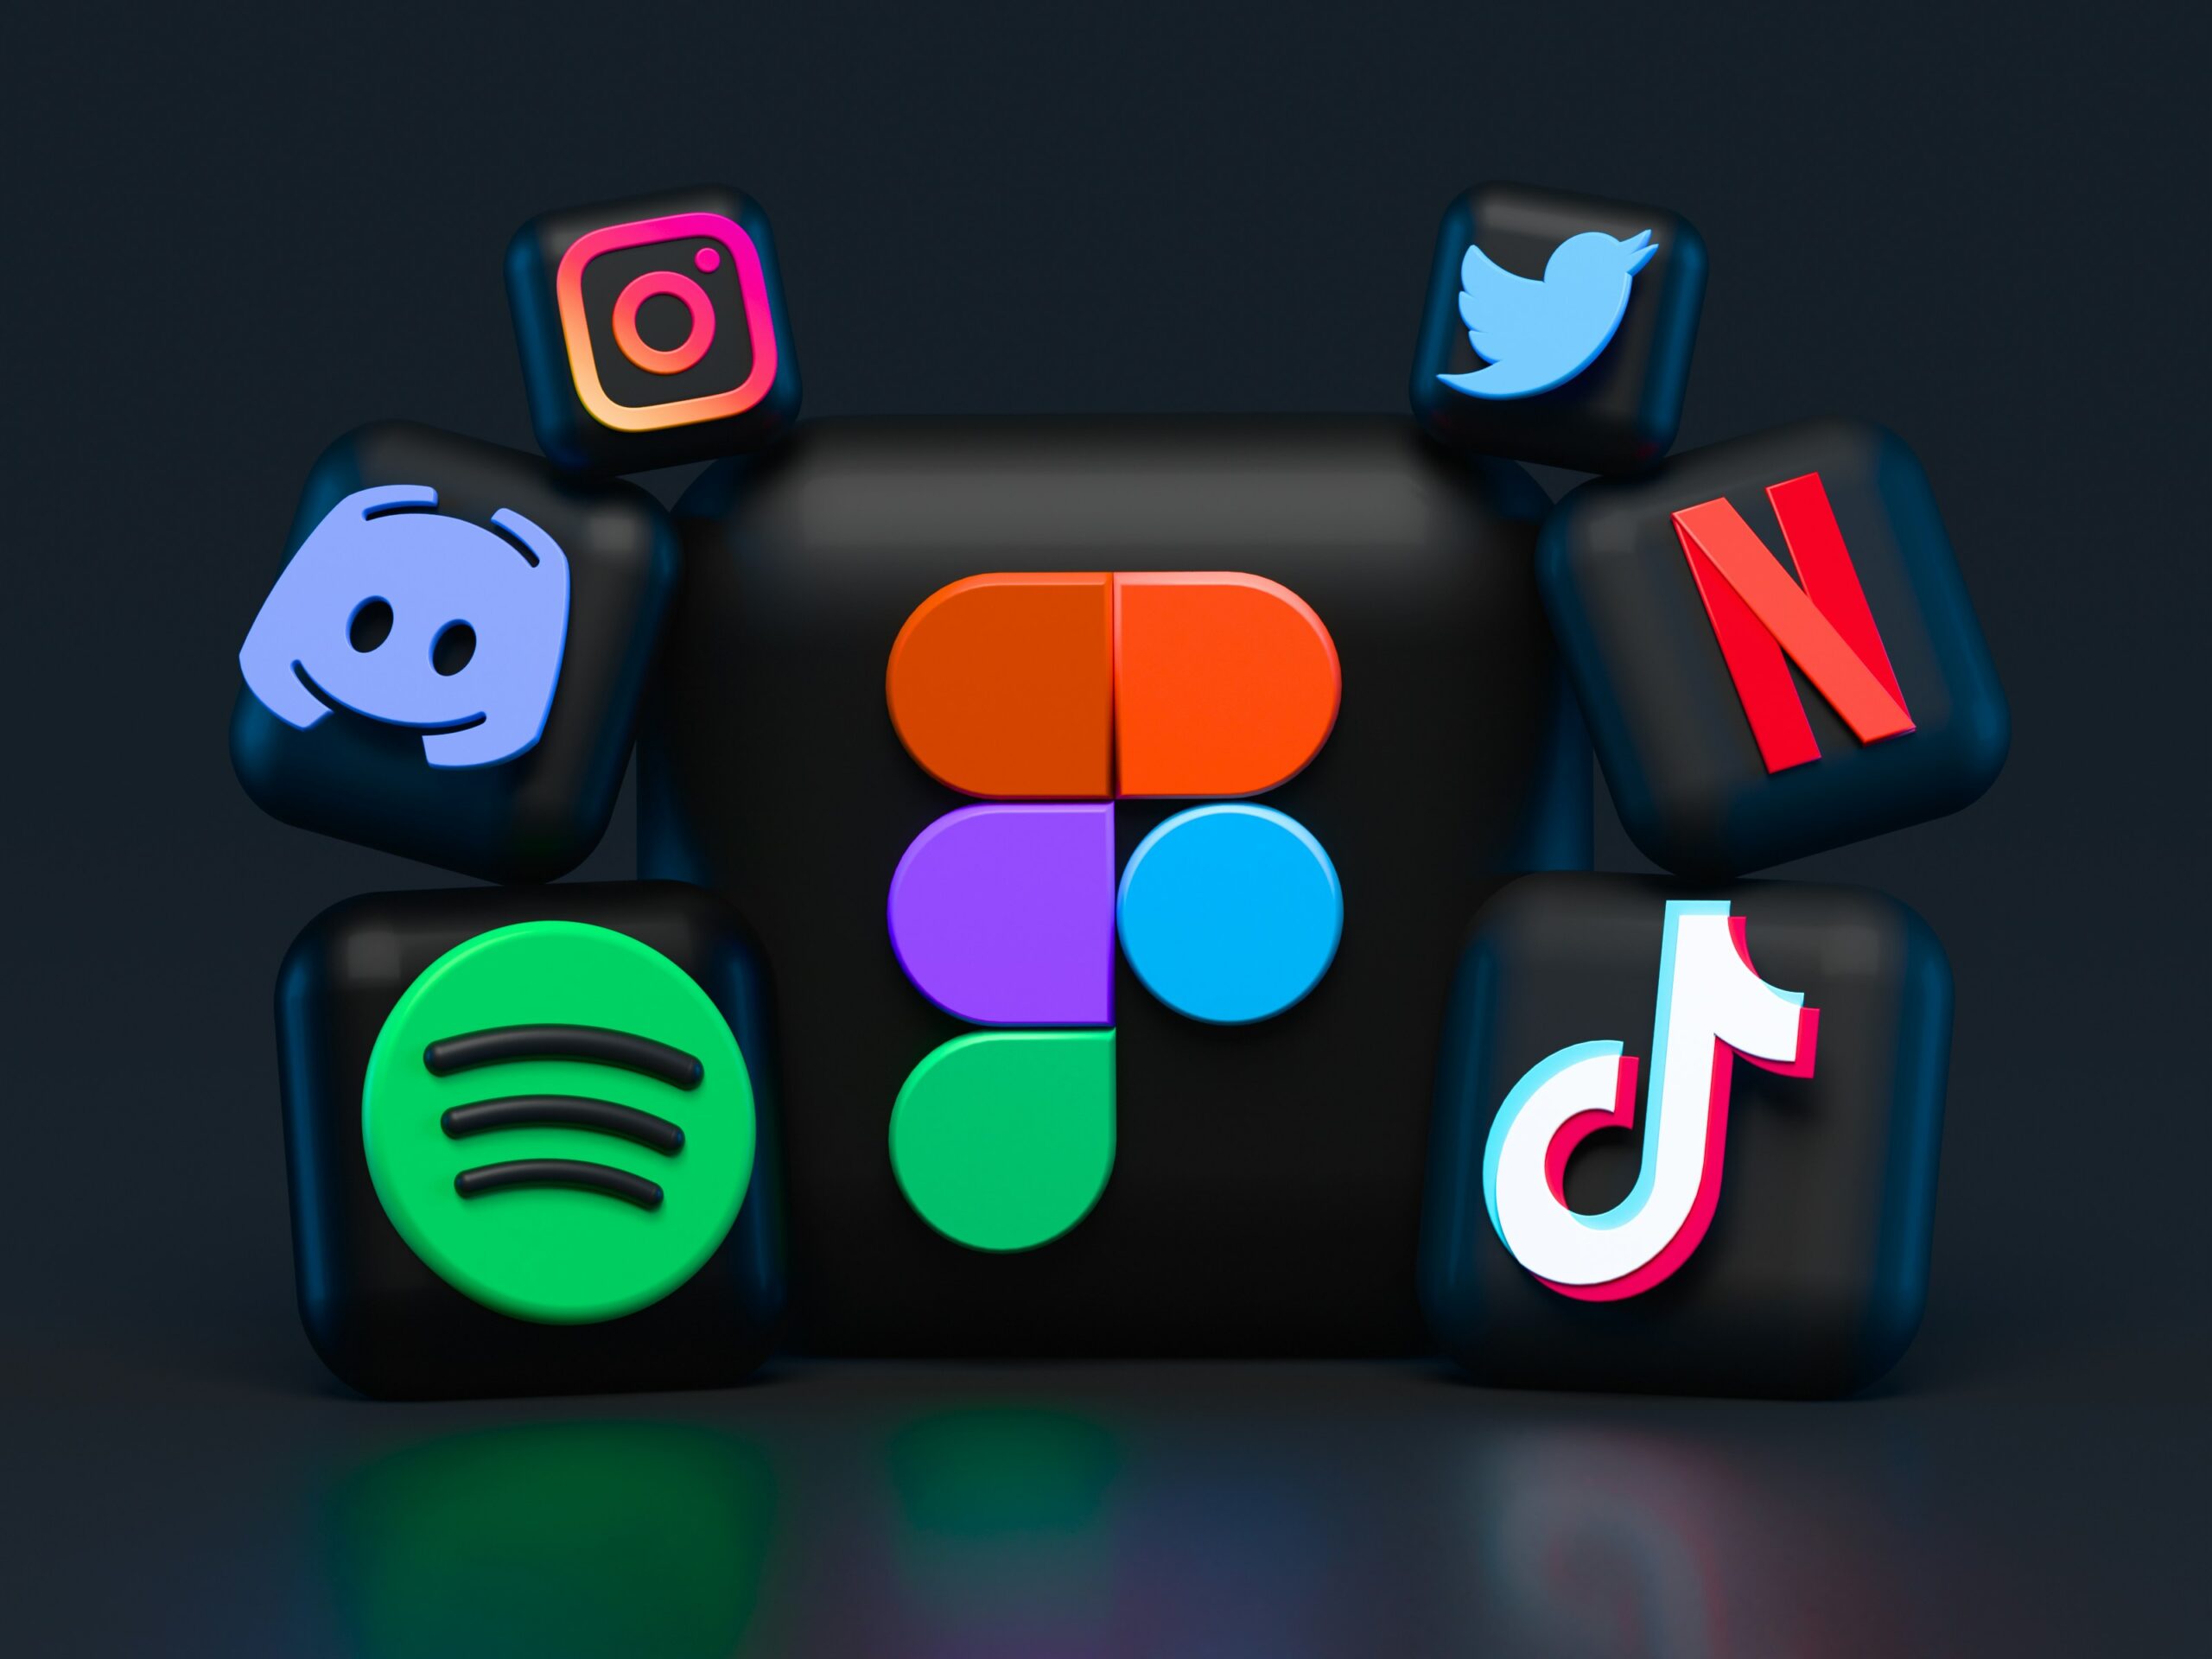 3D modle of multiple social media logos.